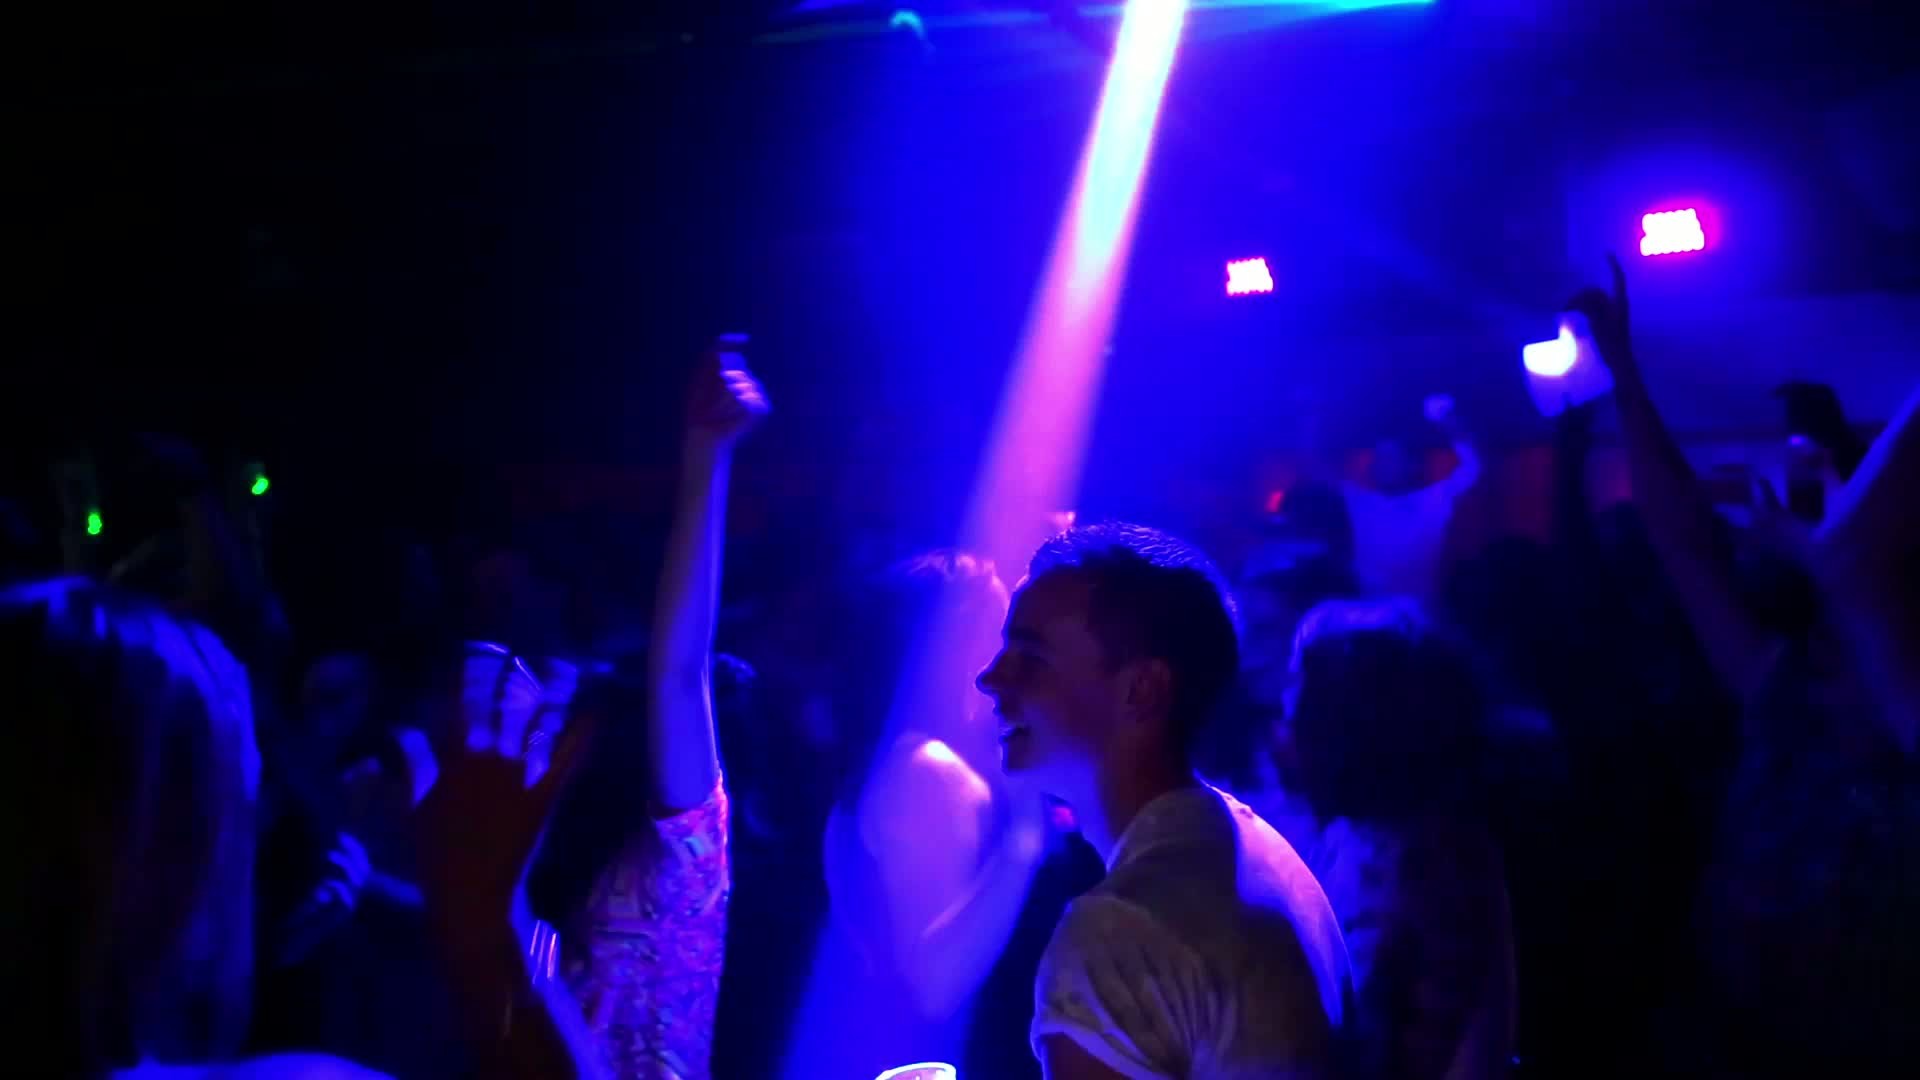 1920x1080 Nightclub Smoke Machine + Dancing Free Stock Video Footage Download Clips